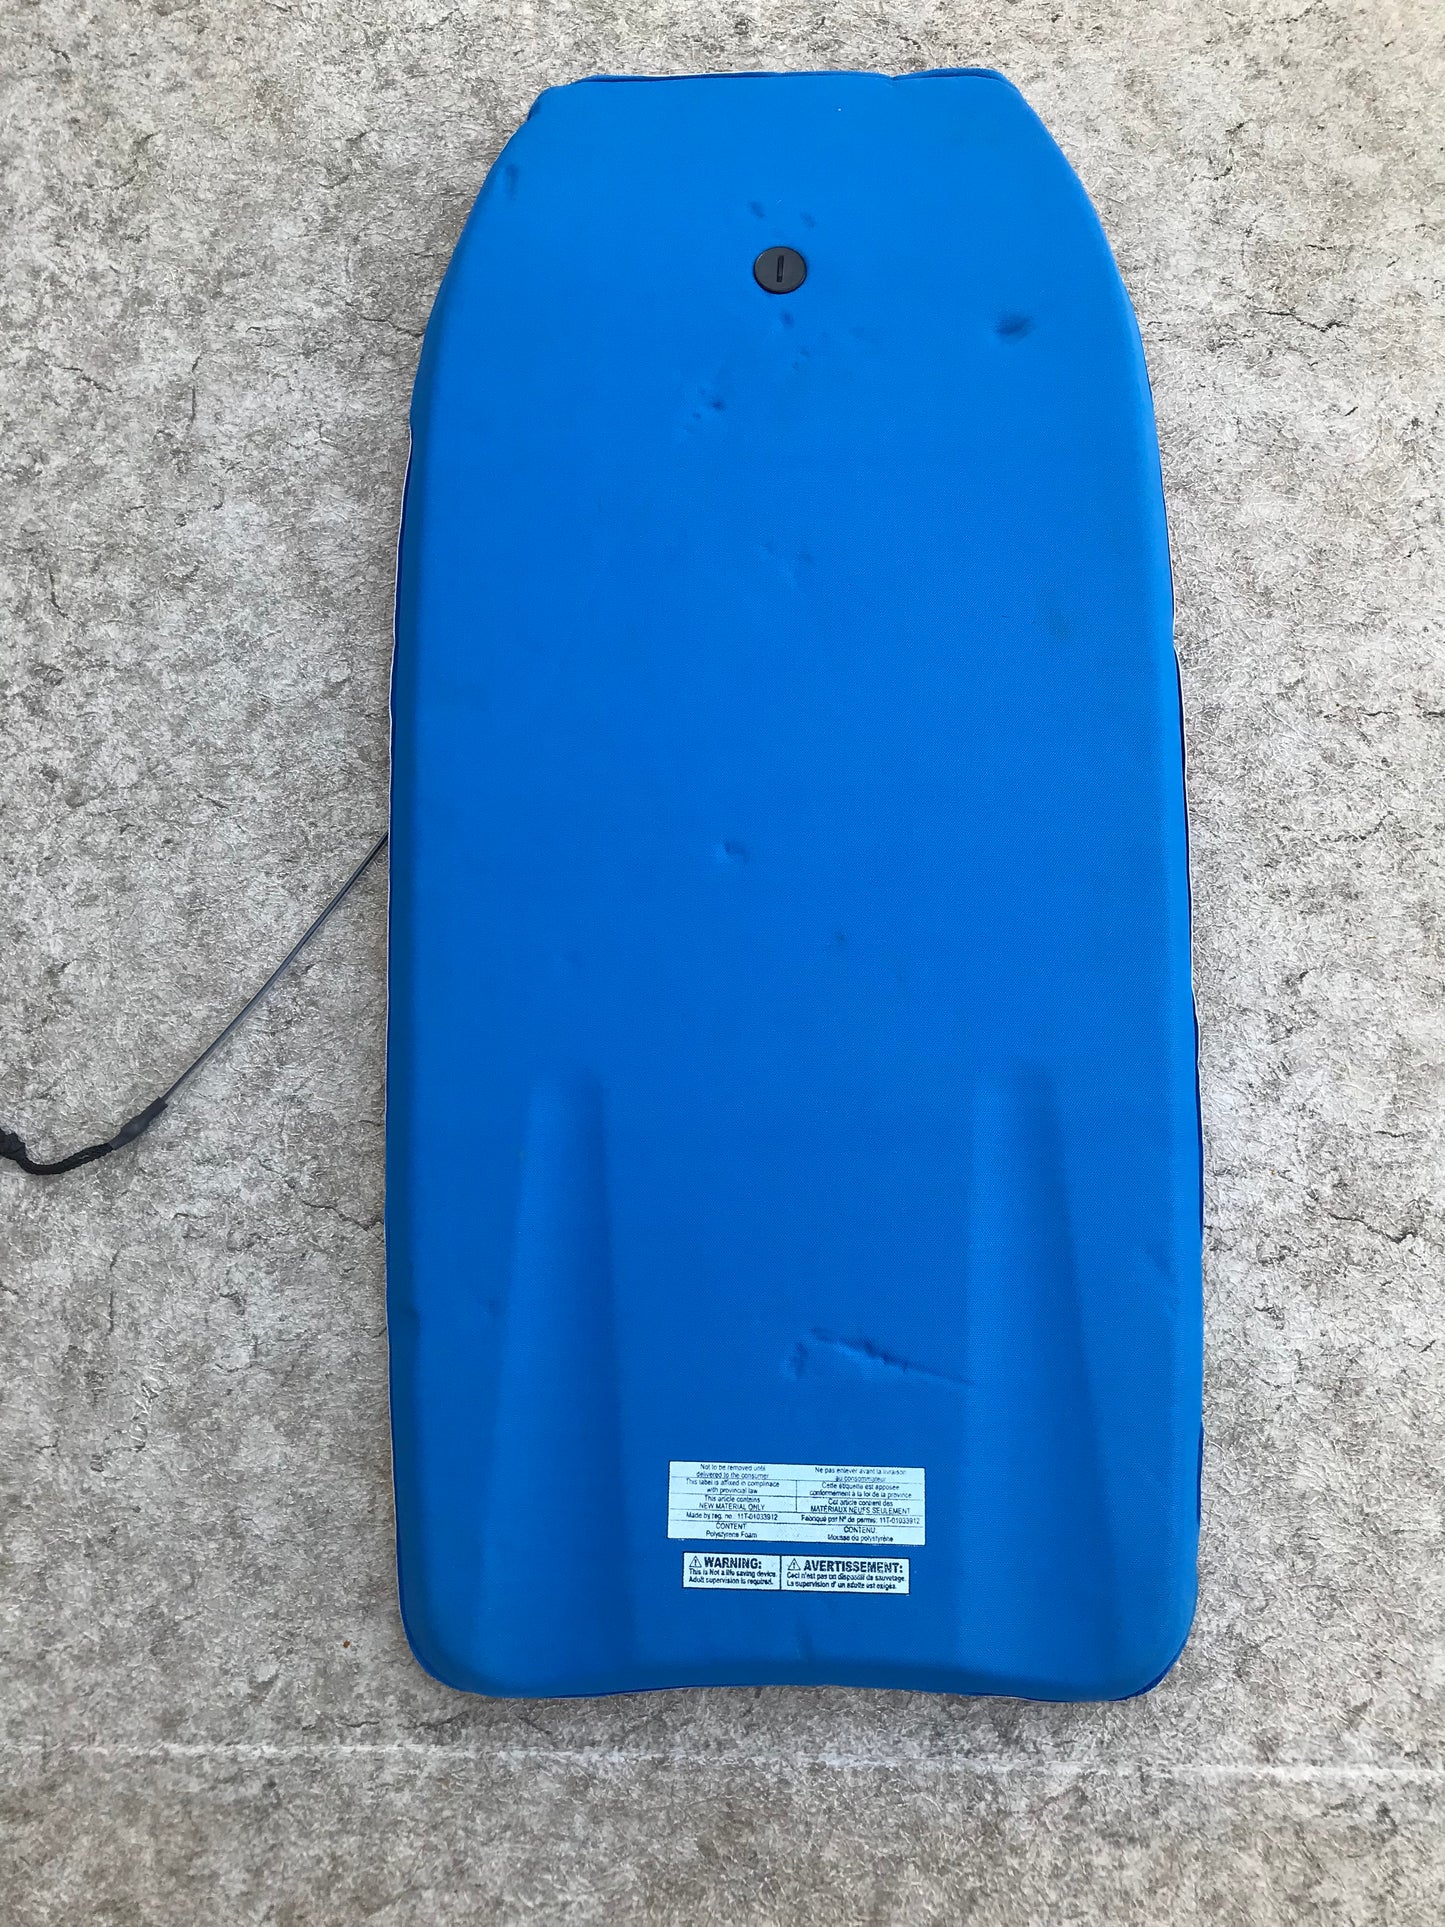 Surf Bodyboard Skim Boogie Board Body Glove Purple Red Blue With Tow Rope 42 x 20 inch